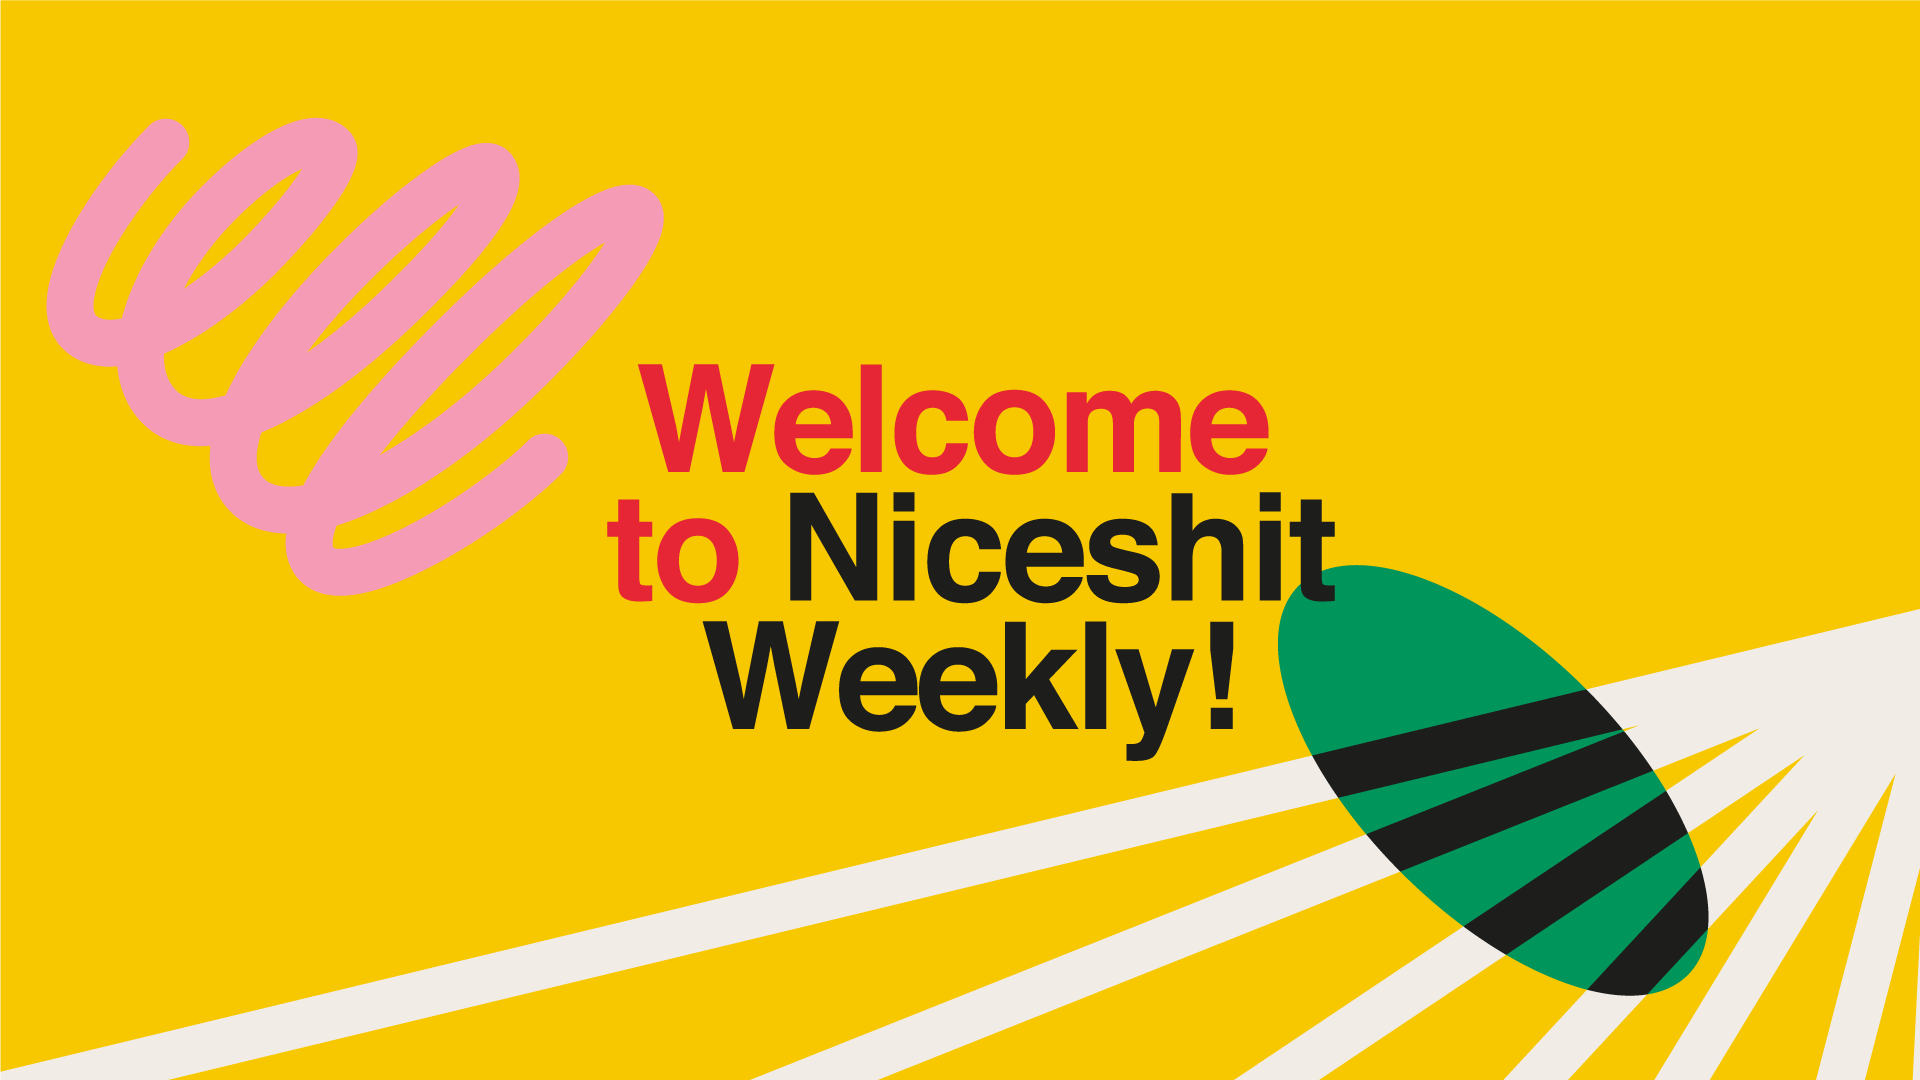 Niceshit Weekly!